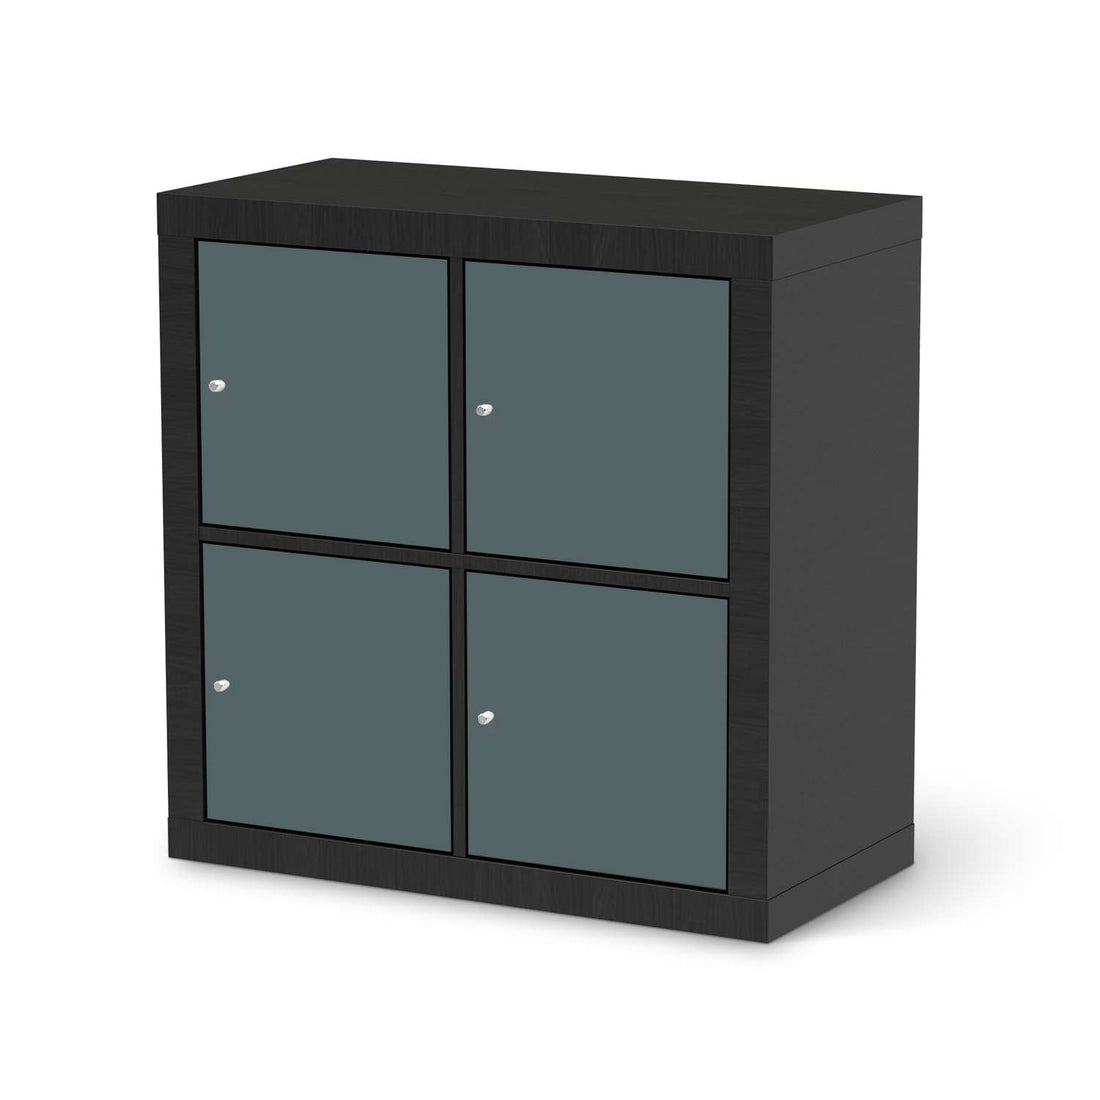 Möbelfolie Blaugrau Light - IKEA Expedit Regal 4 Türen - schwarz